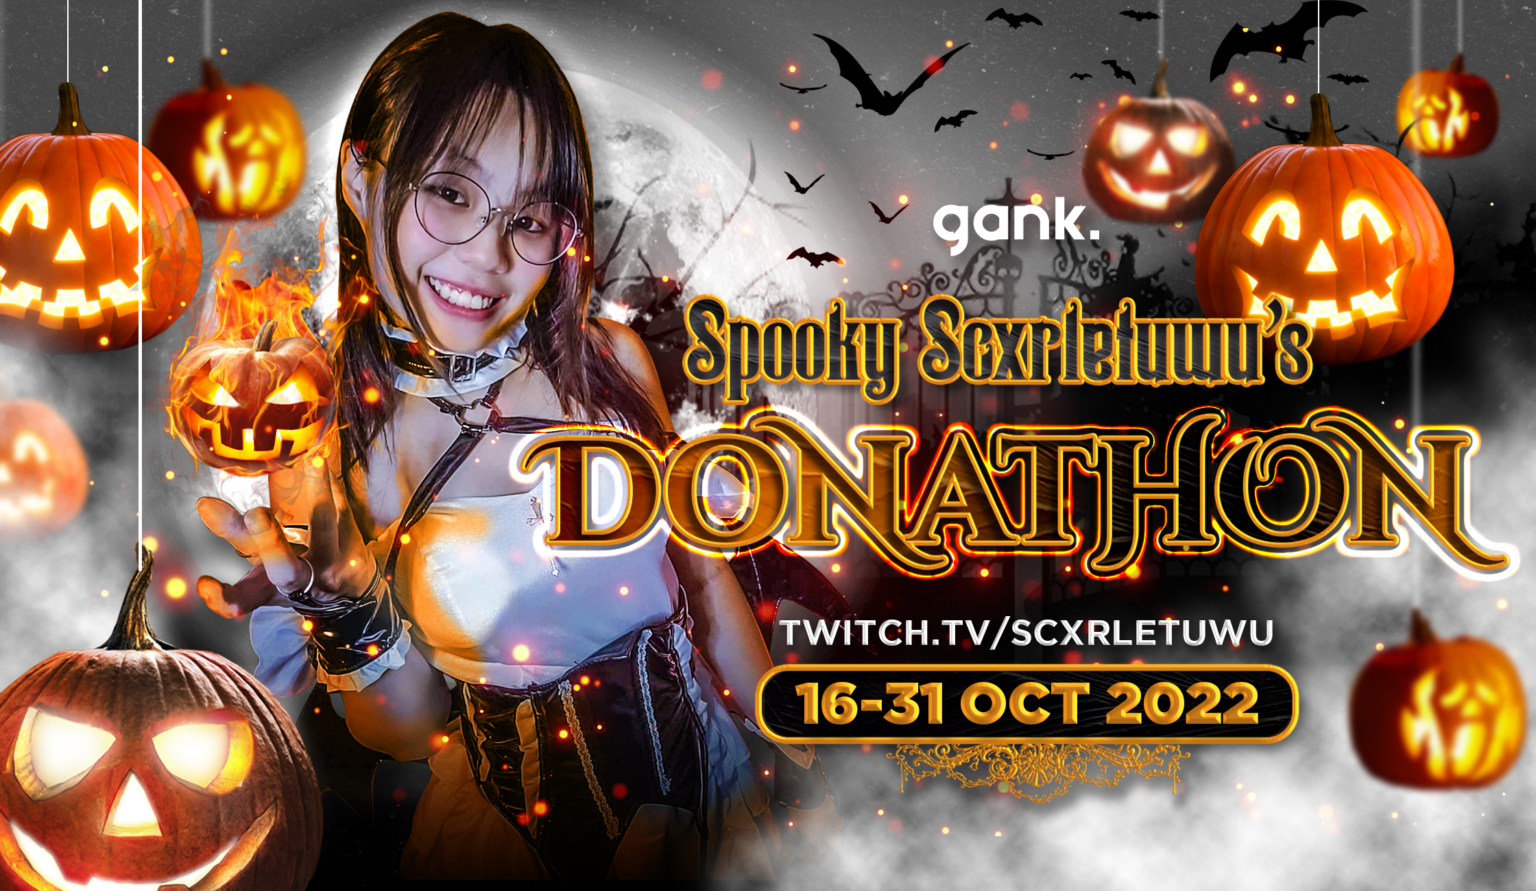 Spooky-Scxarlet-Donathon